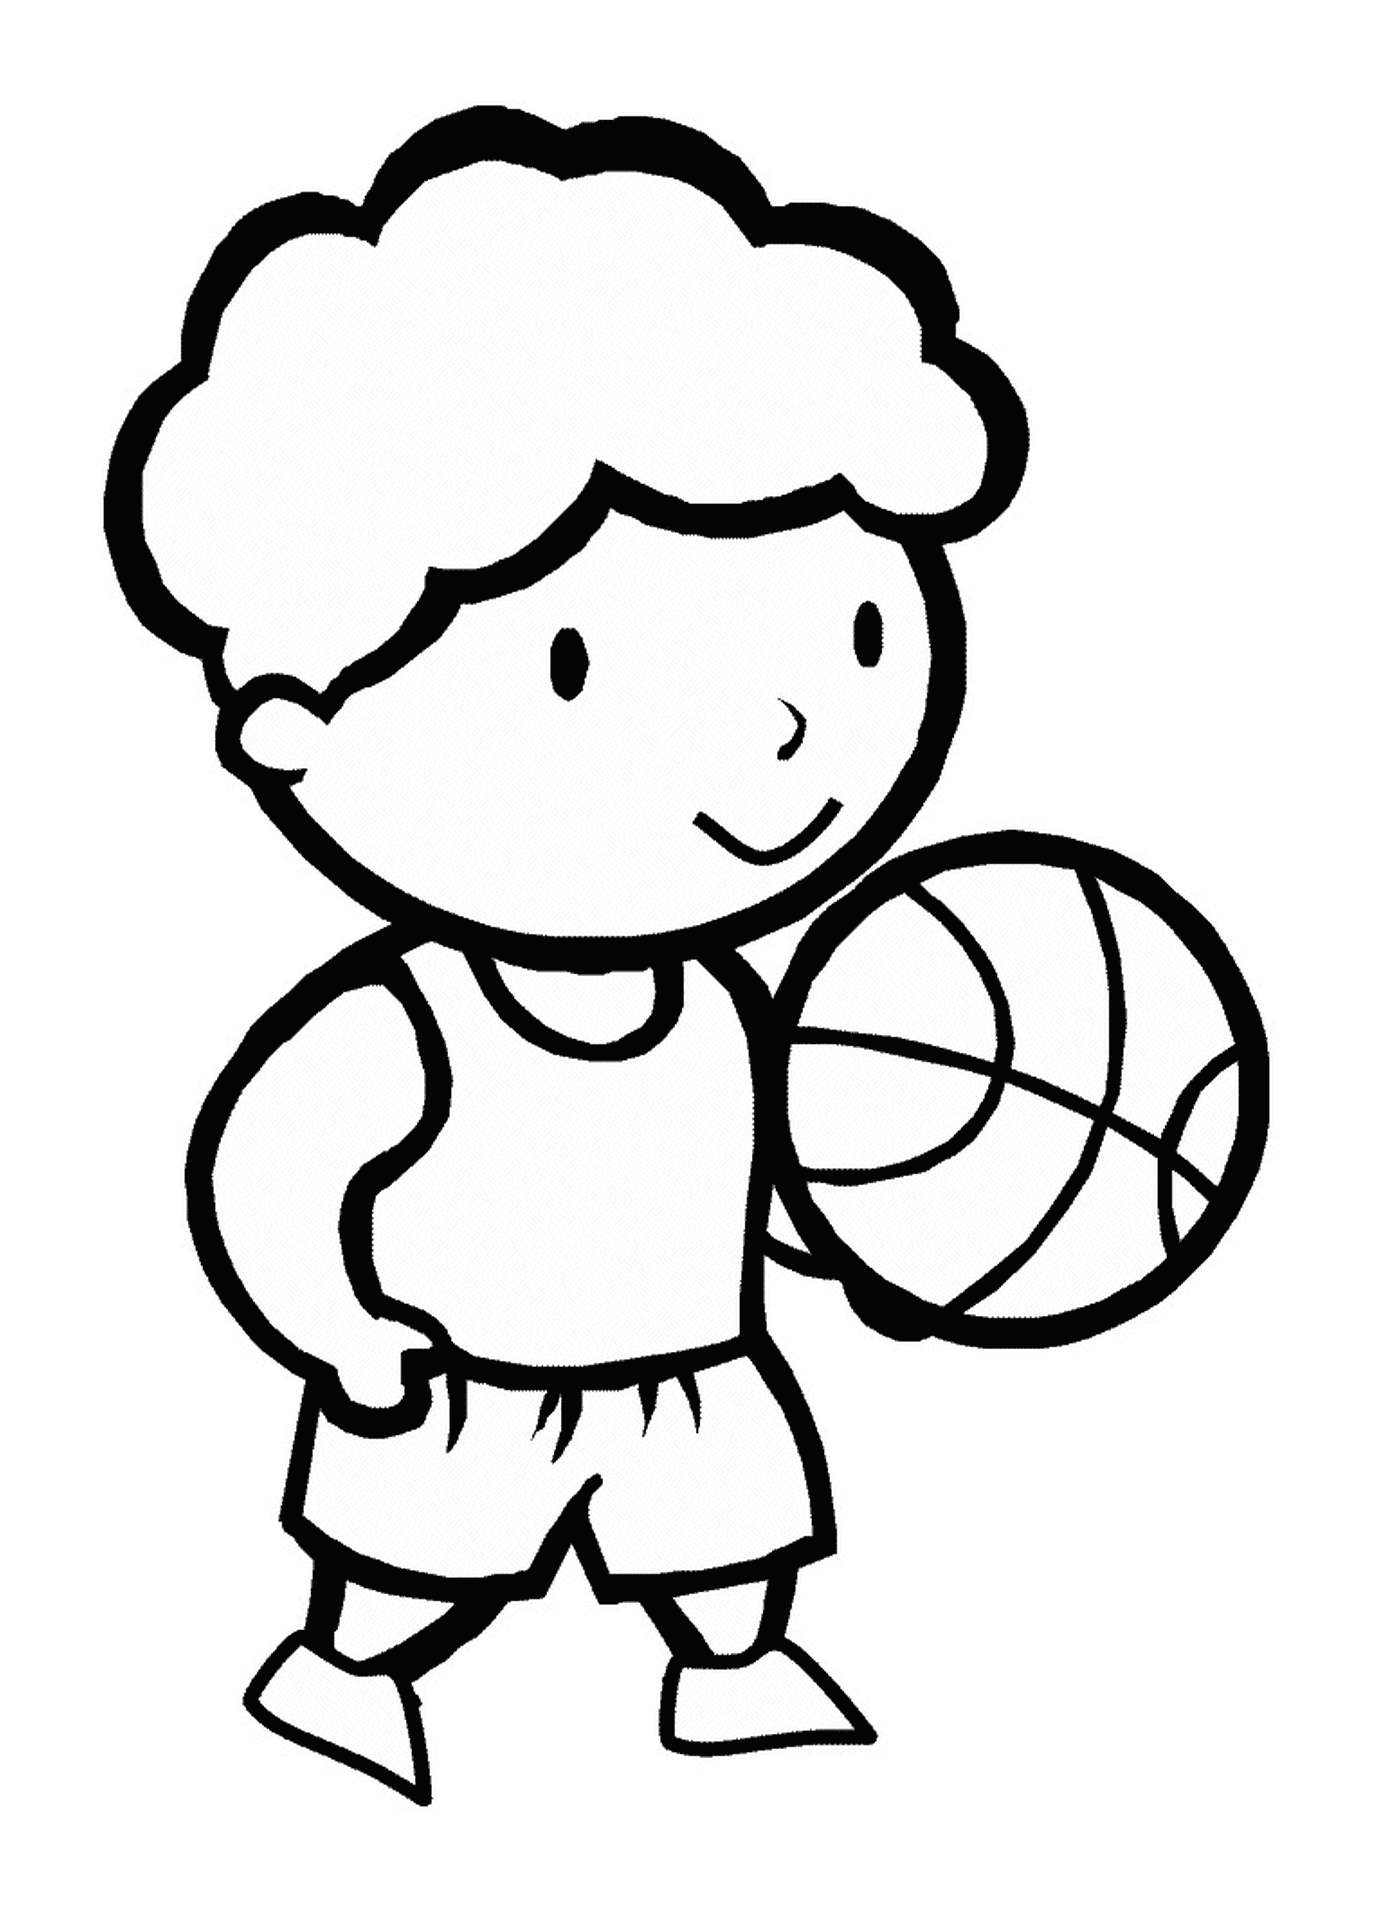  A basketball player 